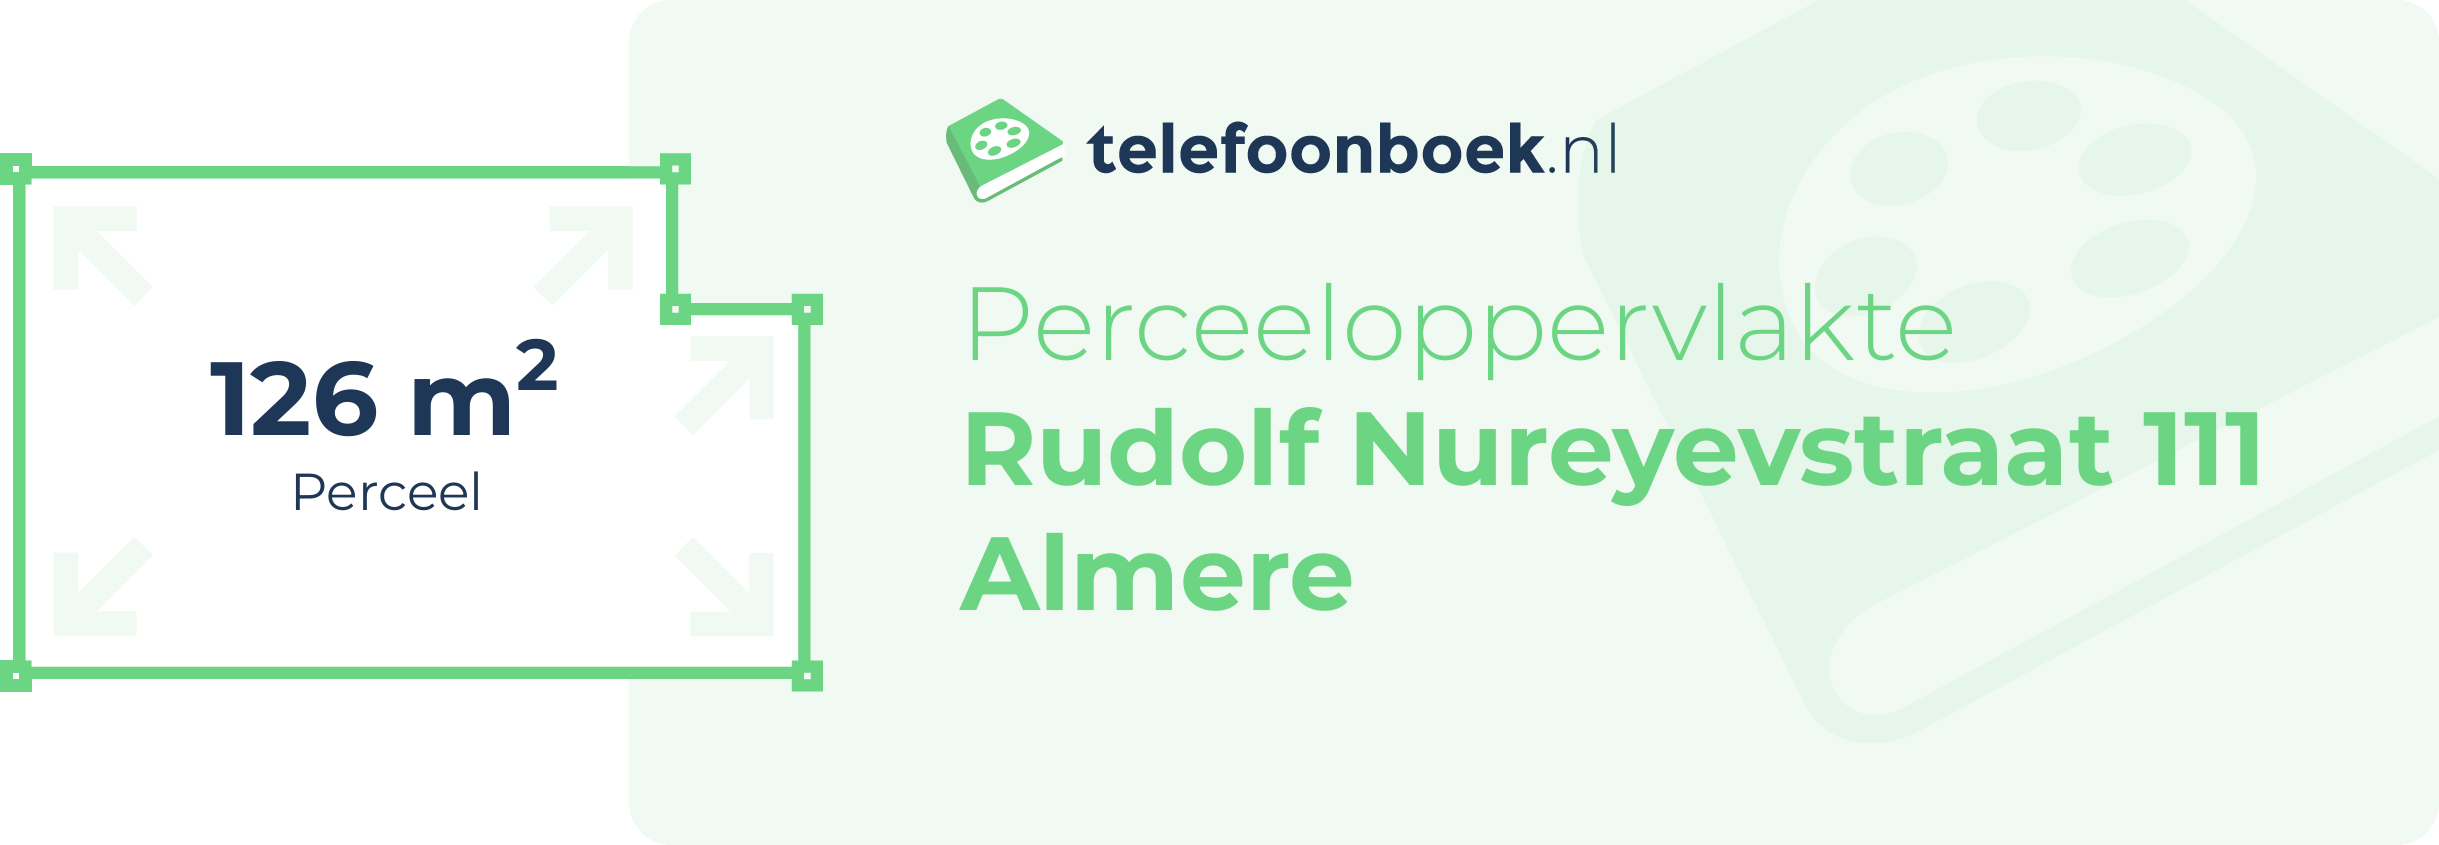 Perceeloppervlakte Rudolf Nureyevstraat 111 Almere